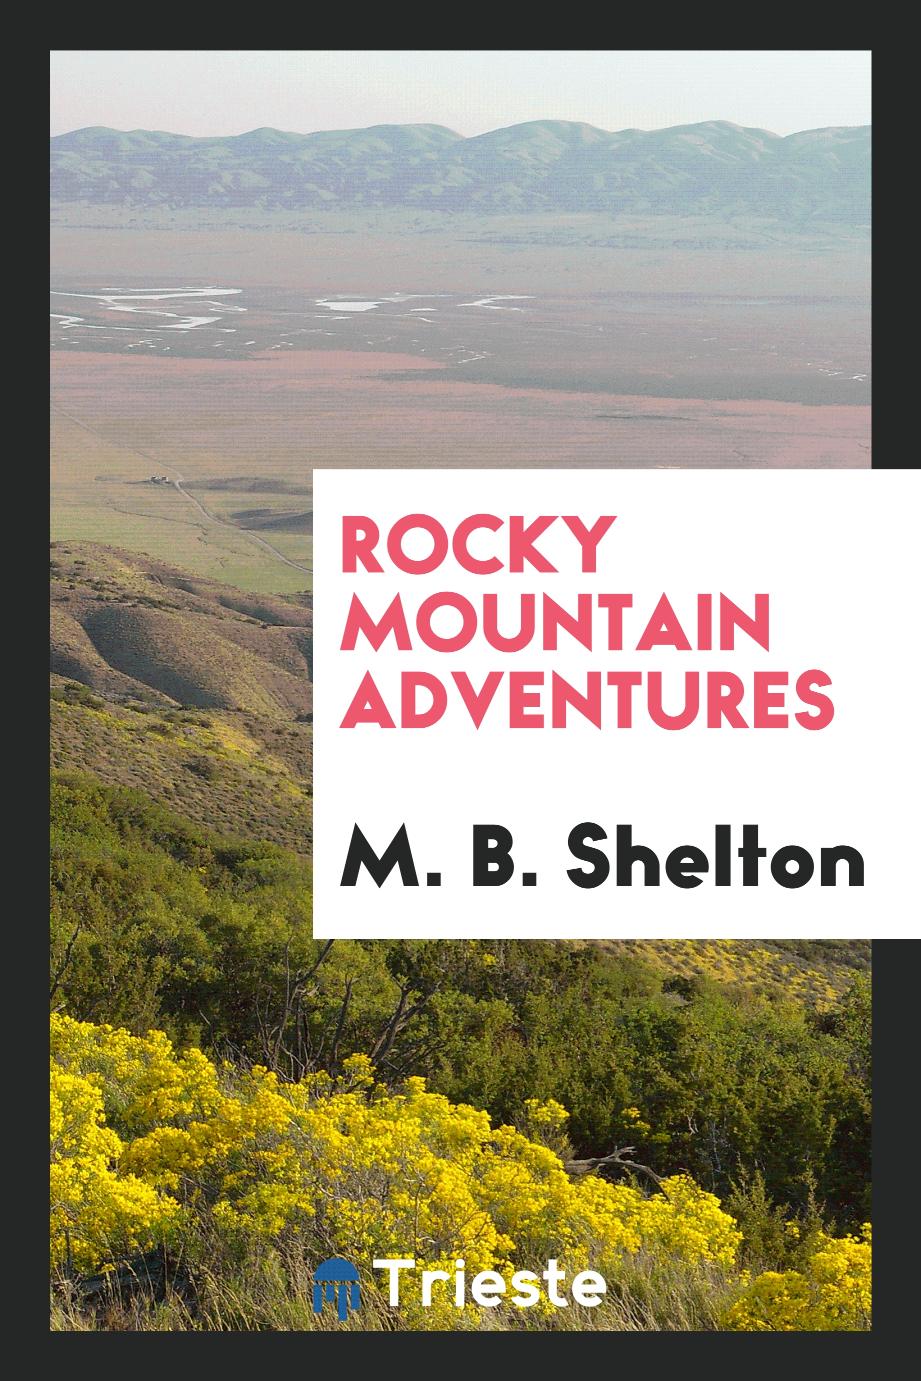 Rocky Mountain adventures